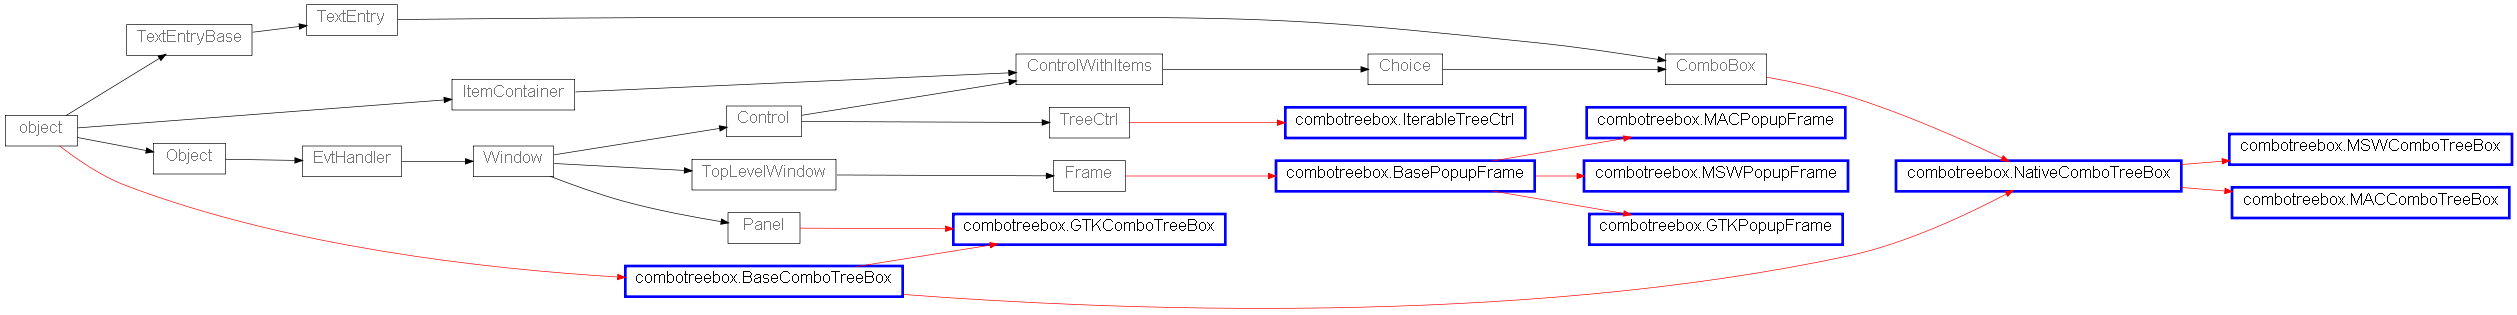 Inheritance diagram of combotreebox